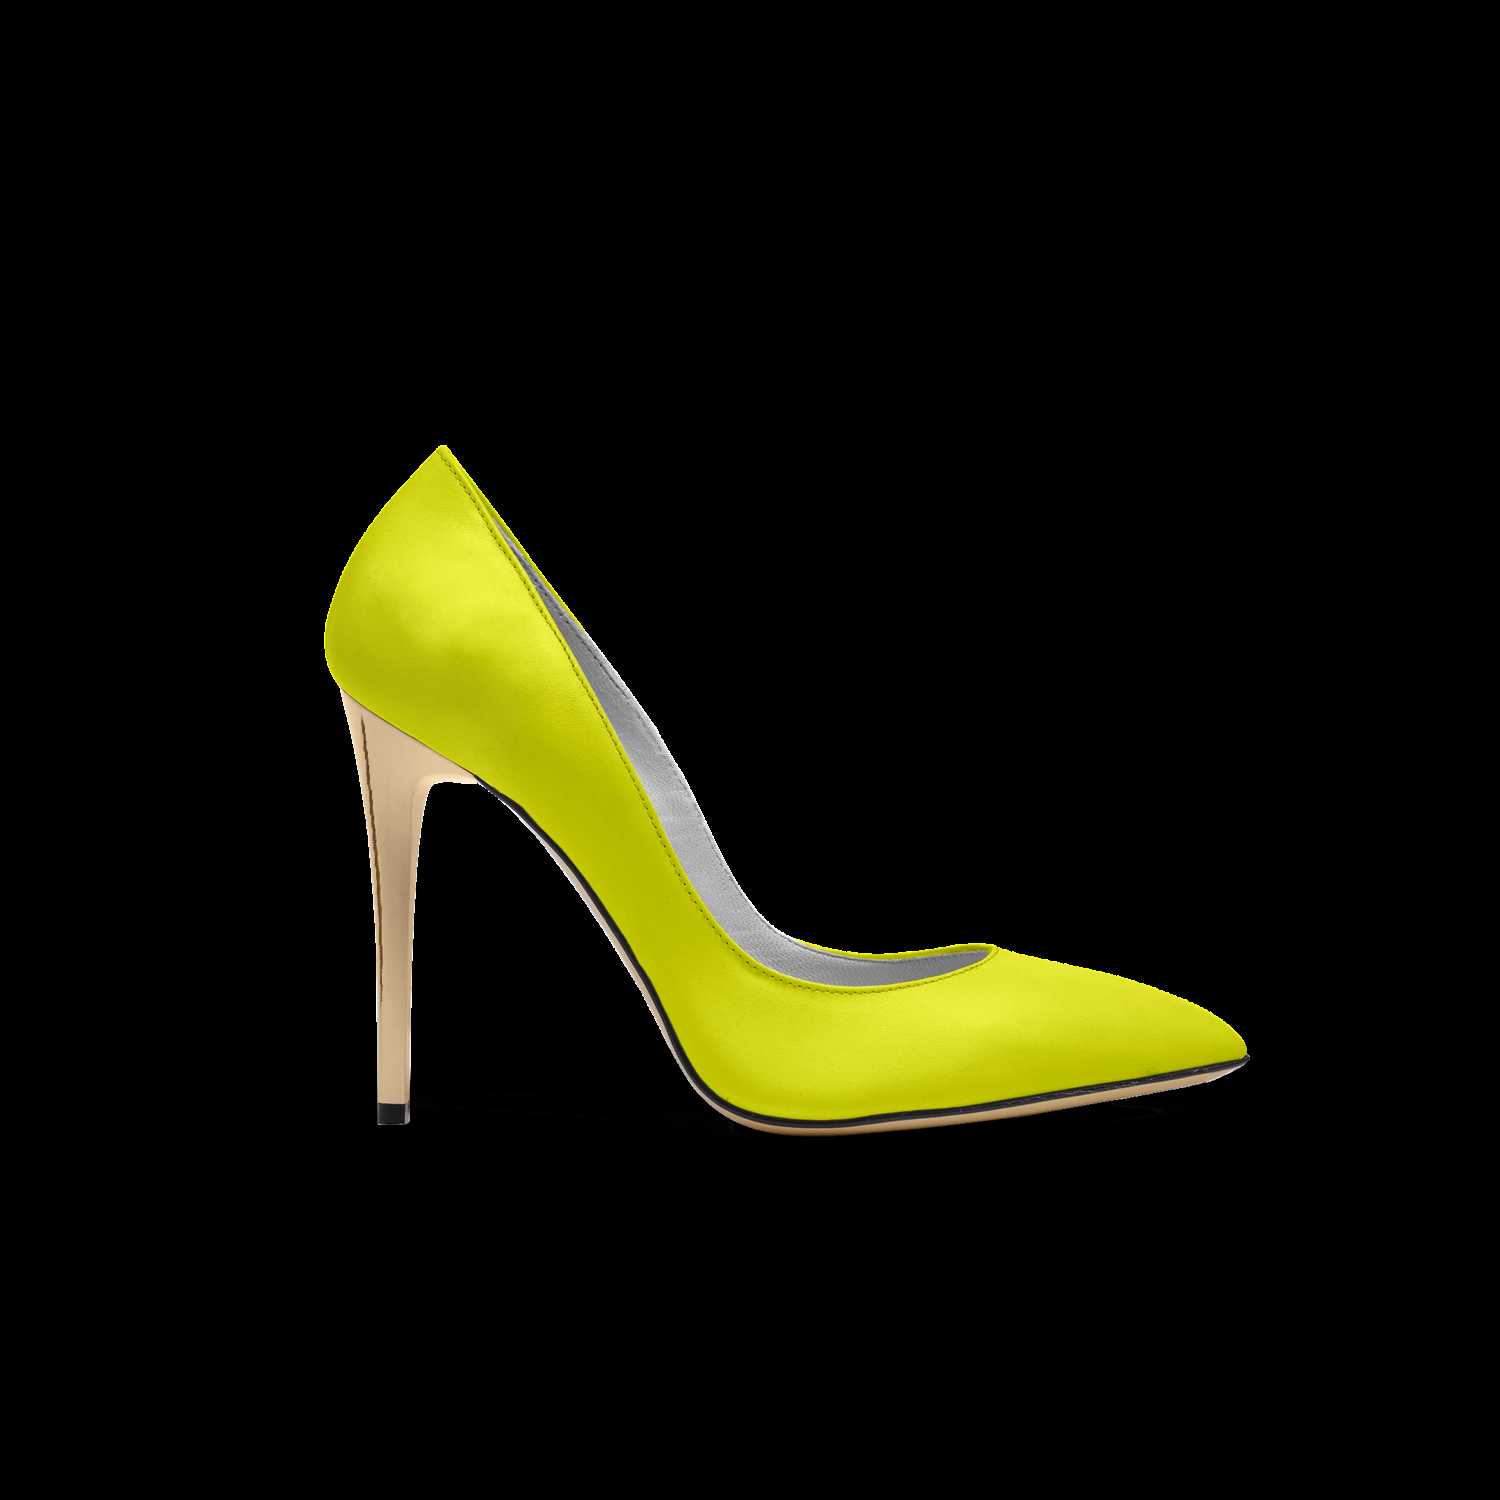 Sexy Yellow Heels - Snakeskin Heels - D'Orsay Pumps - $79.00 - Lulus